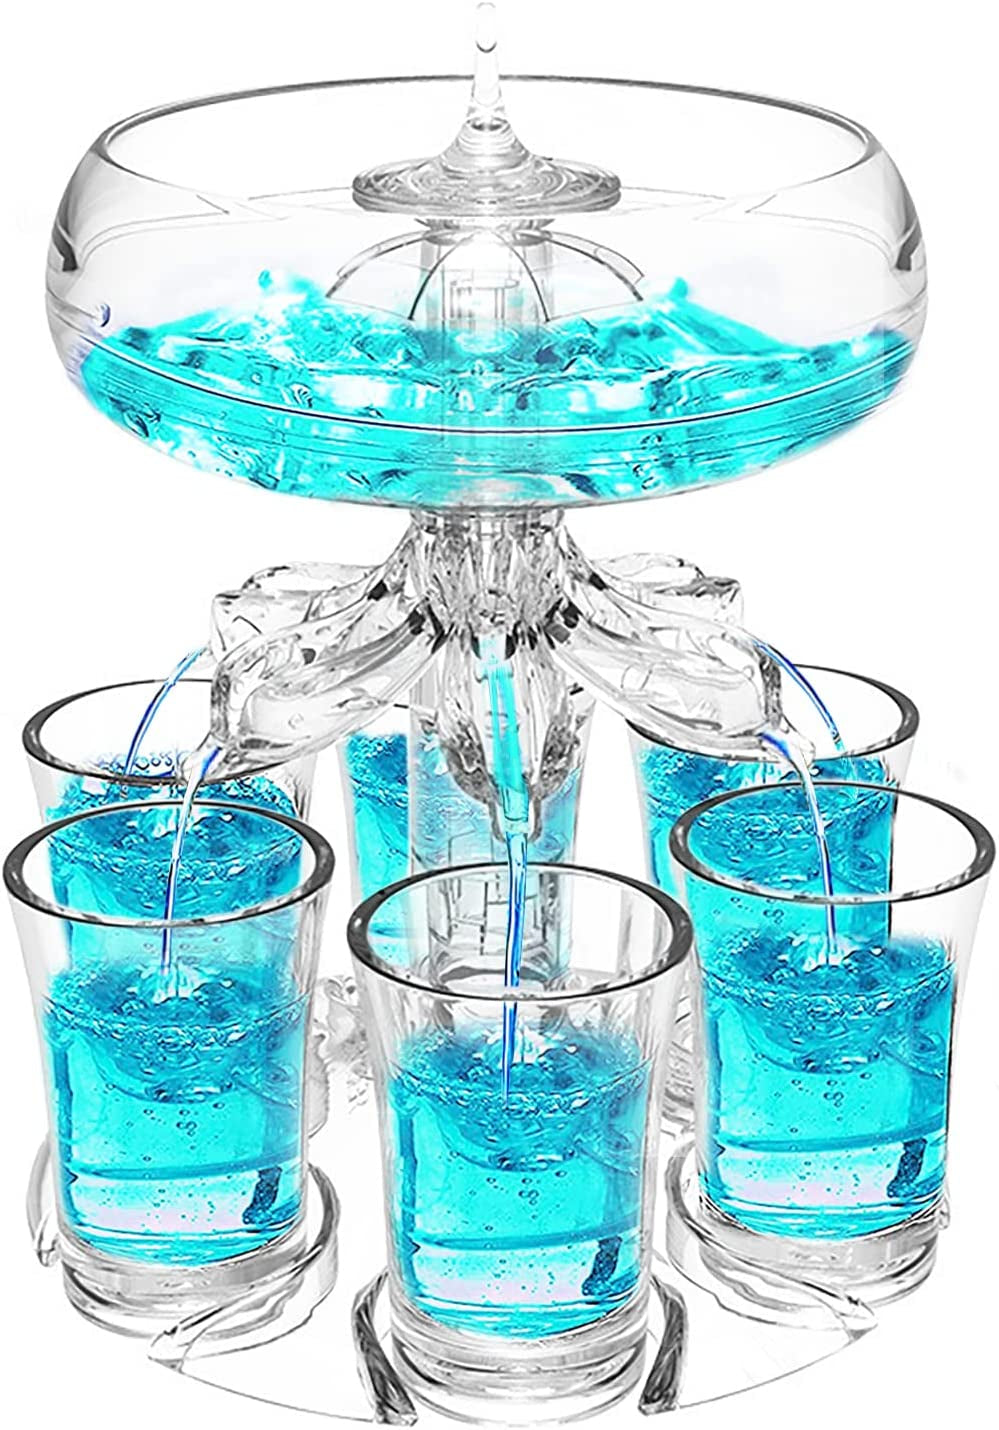 Shot Dispenser with 6 Shot Glasses Set - Party Drink Dispenser Liquor Dispenser and Holder Shot Pourer for Beverage | Cider | Liquor | Cocktail - Fun Bar Accessories Home Gifts (V2)